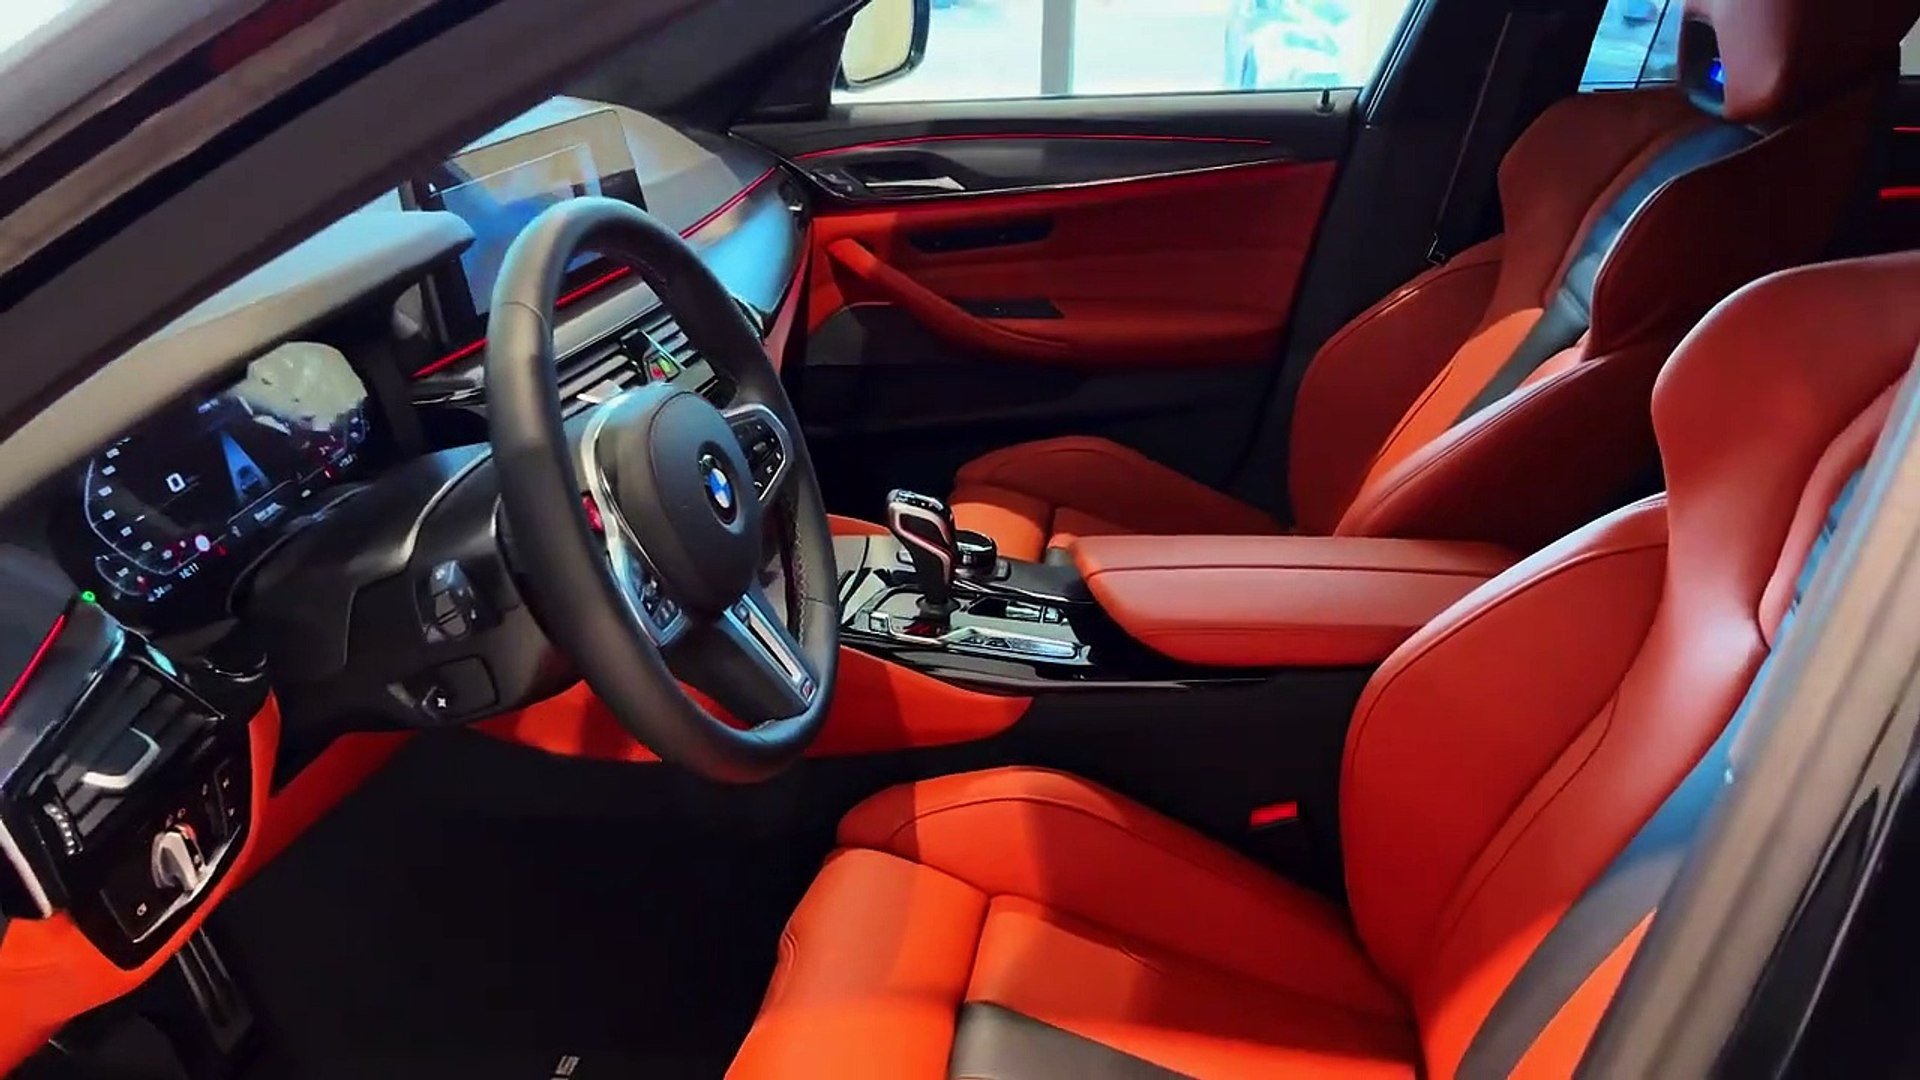 BMW M5 interior - Rear Seats